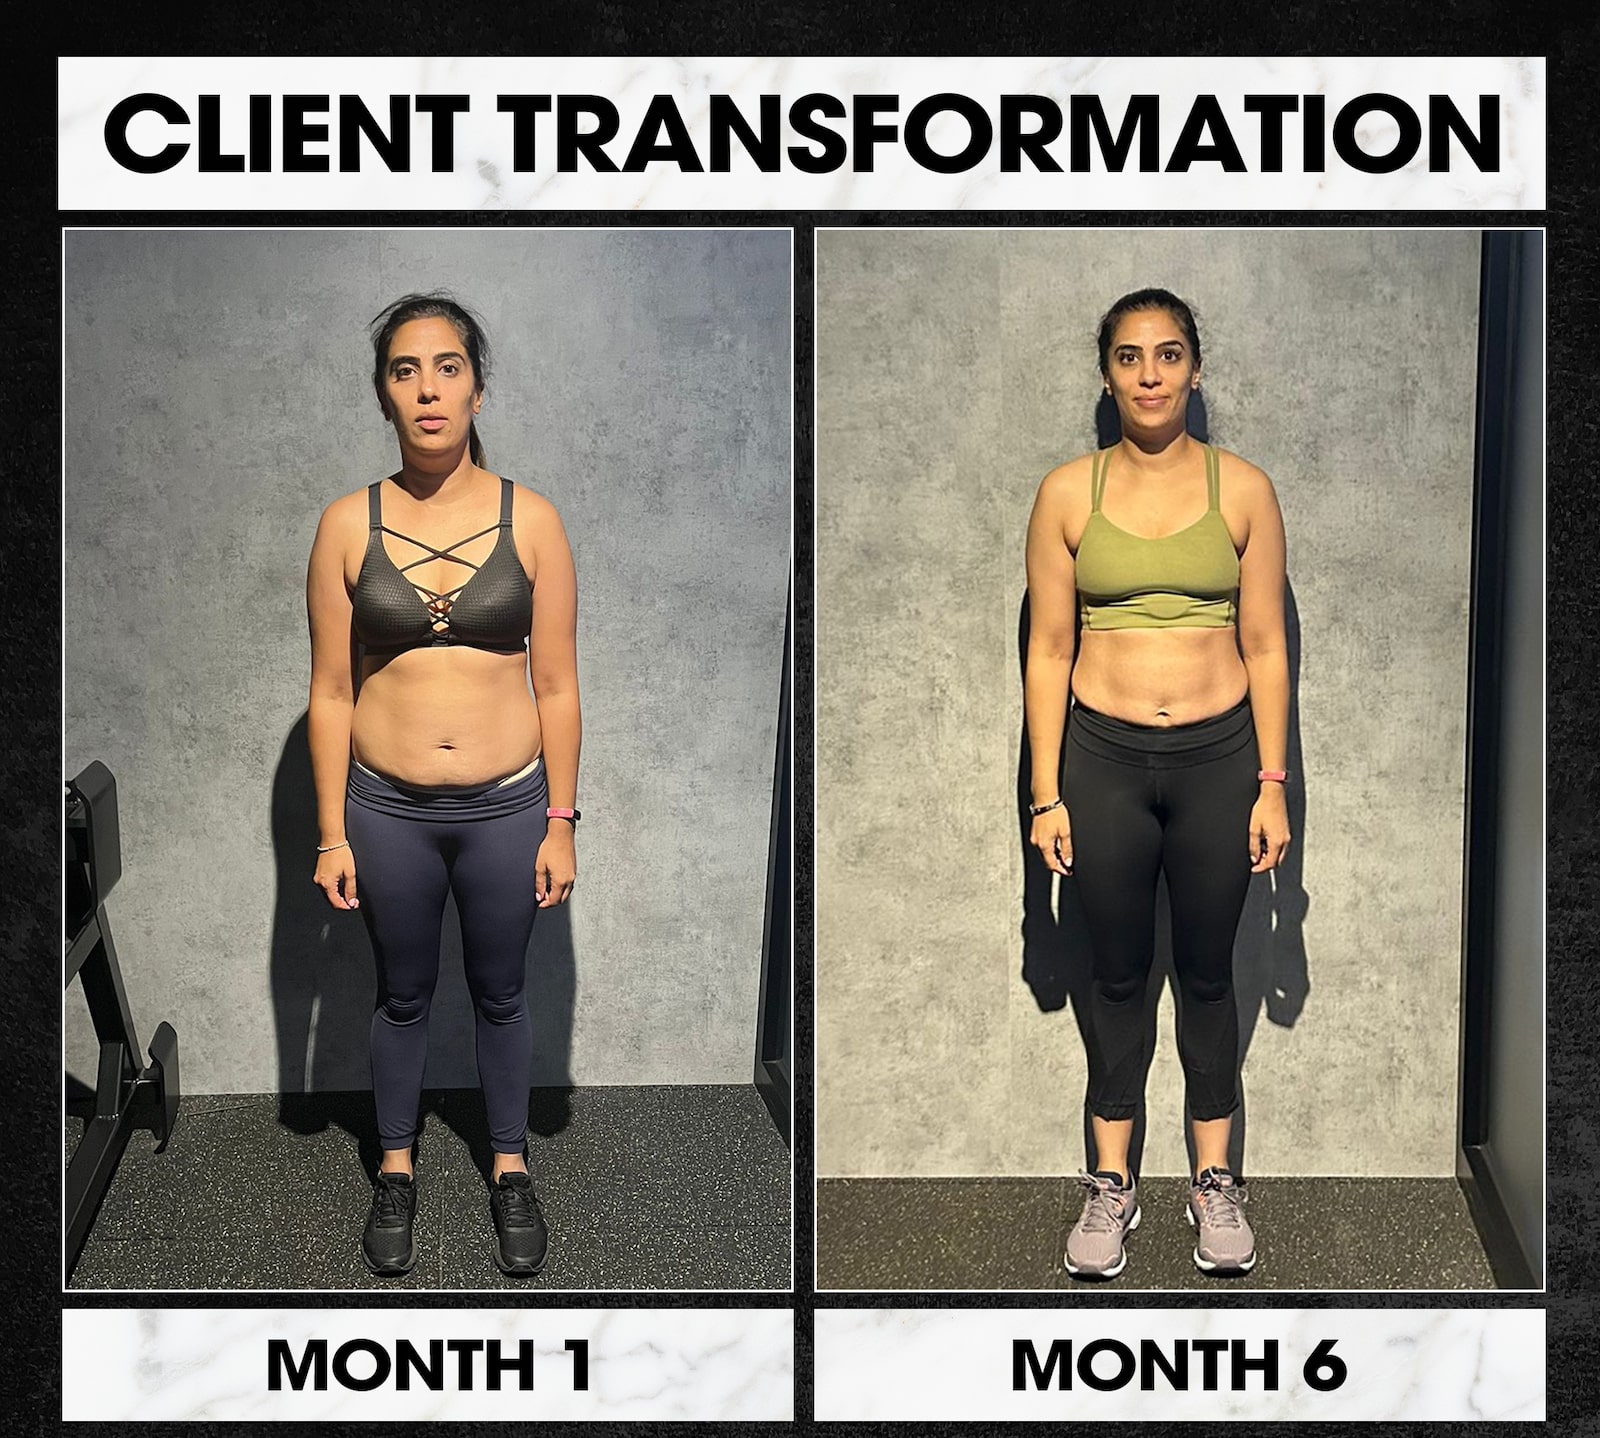 Client Transformation